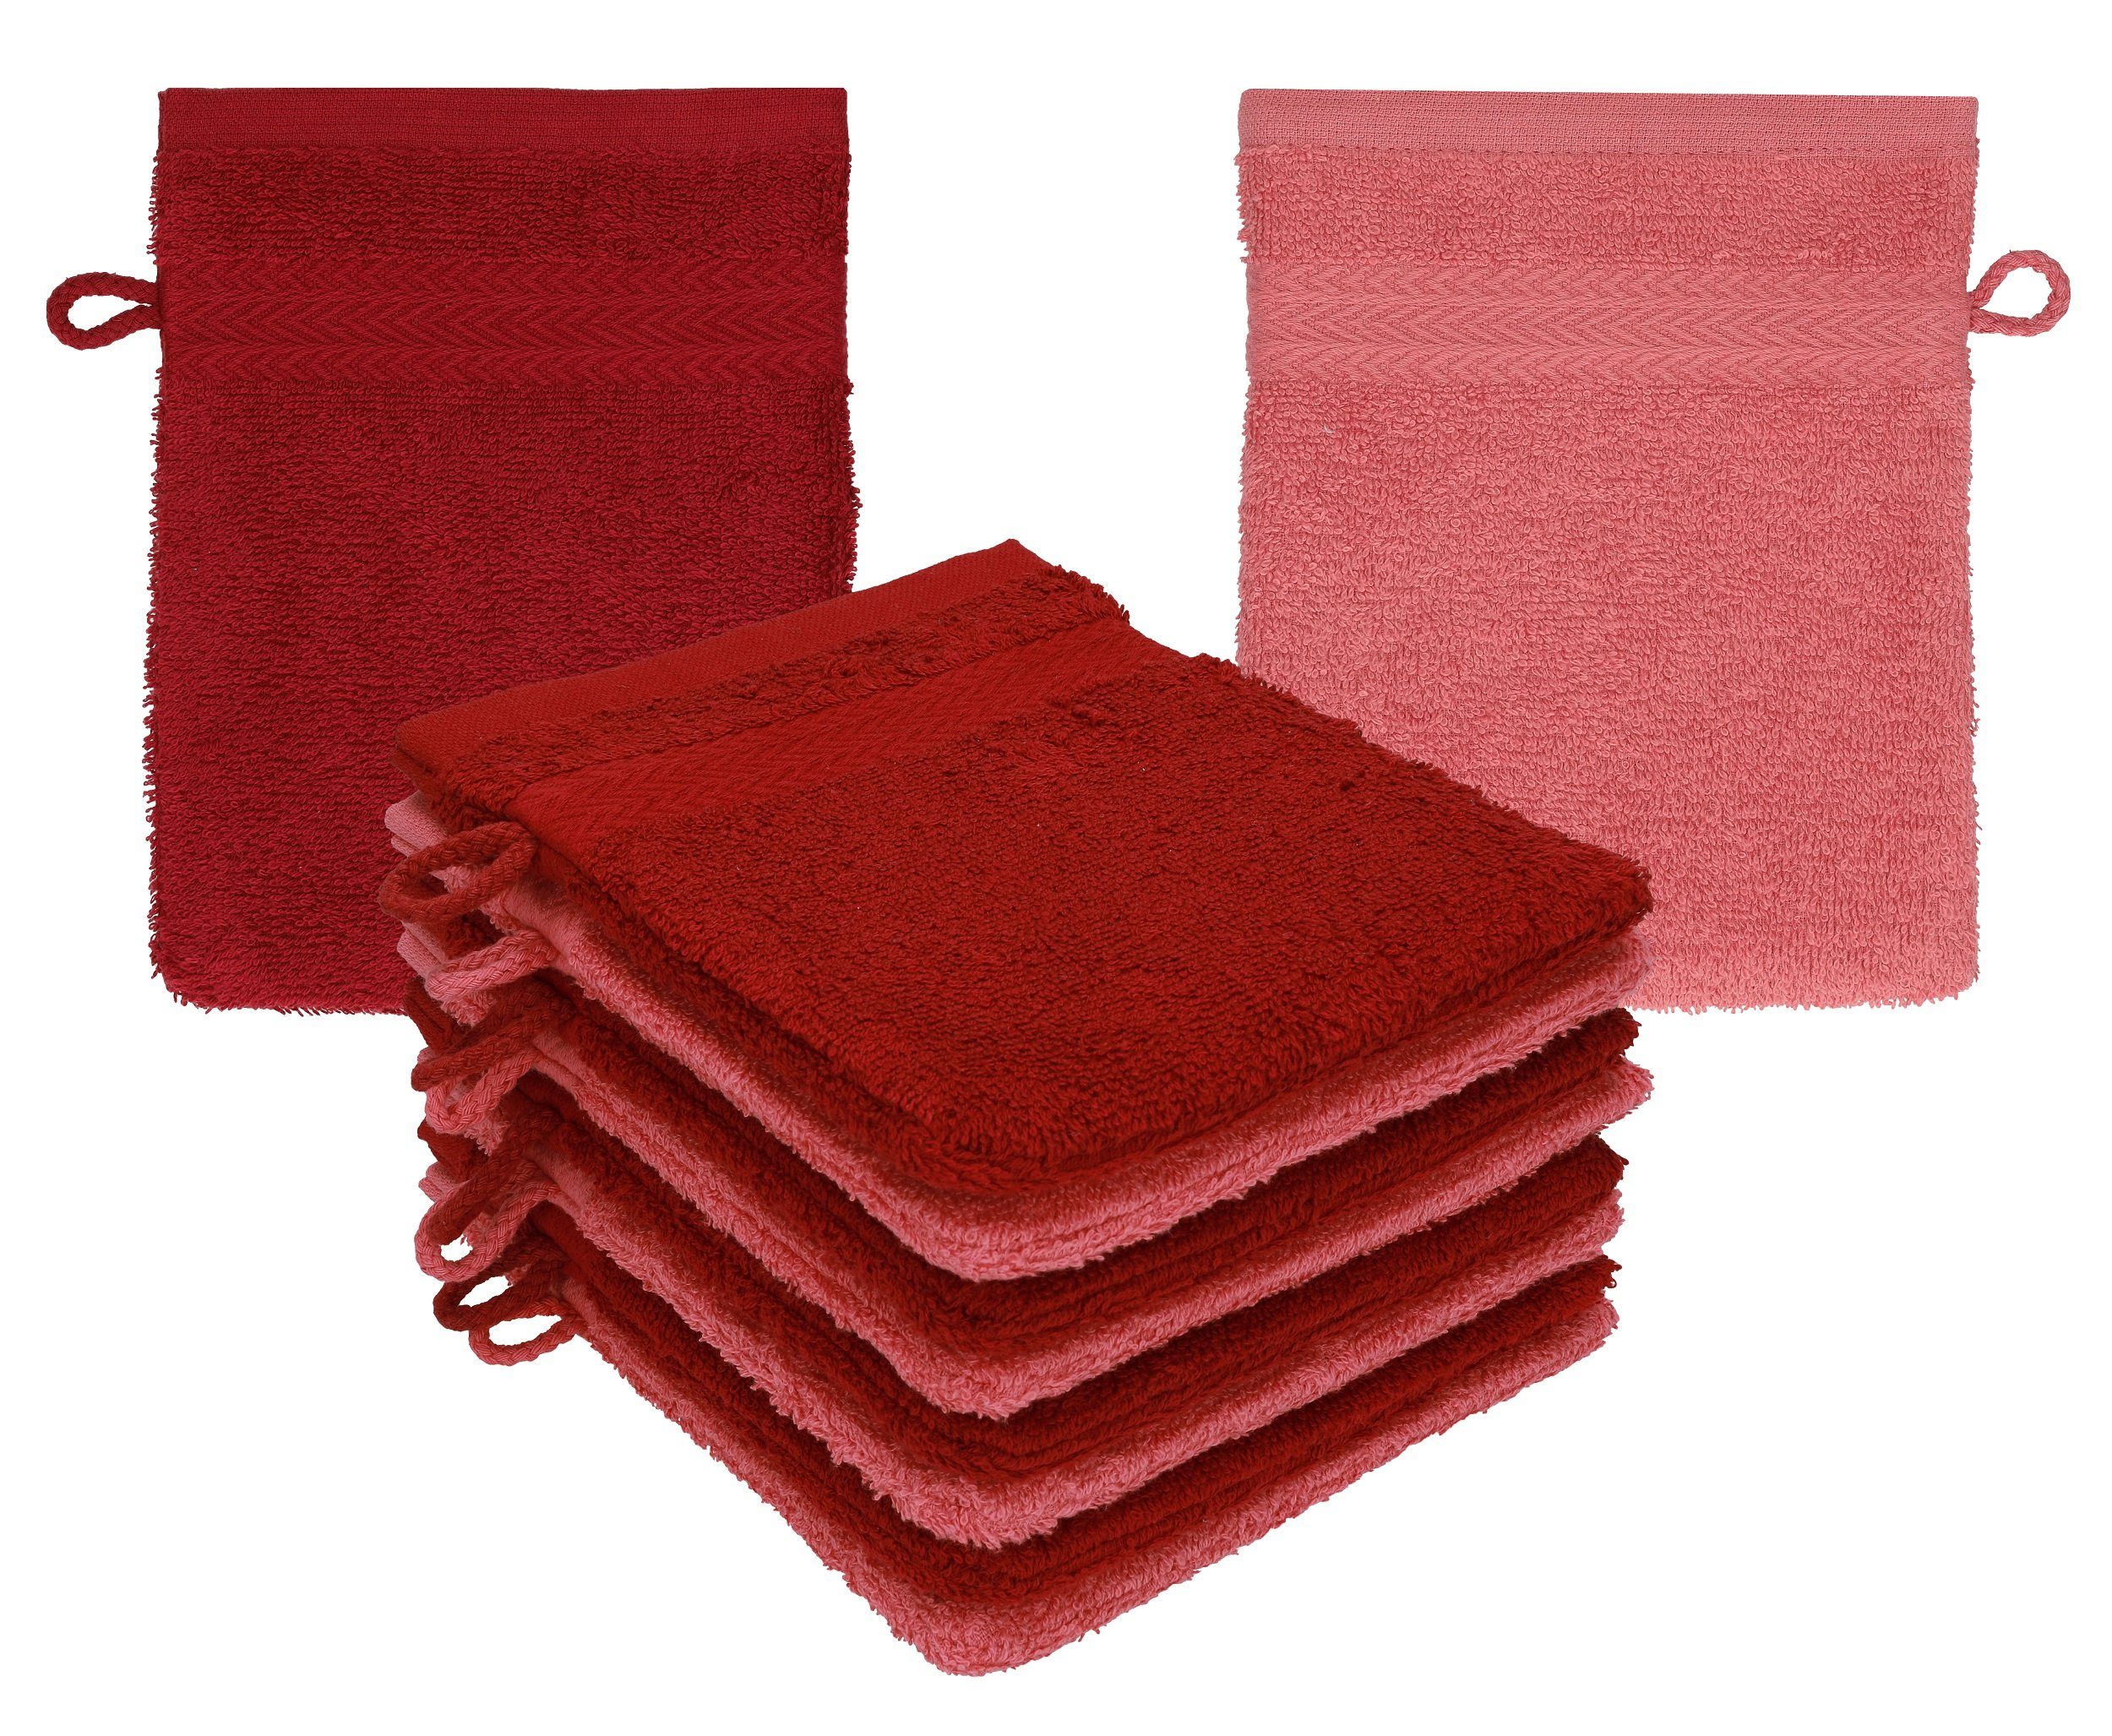 Betz Waschhandschuh 10 Stück Waschhandschuhe Premium 100% Baumwolle rubinrot/ himbeere